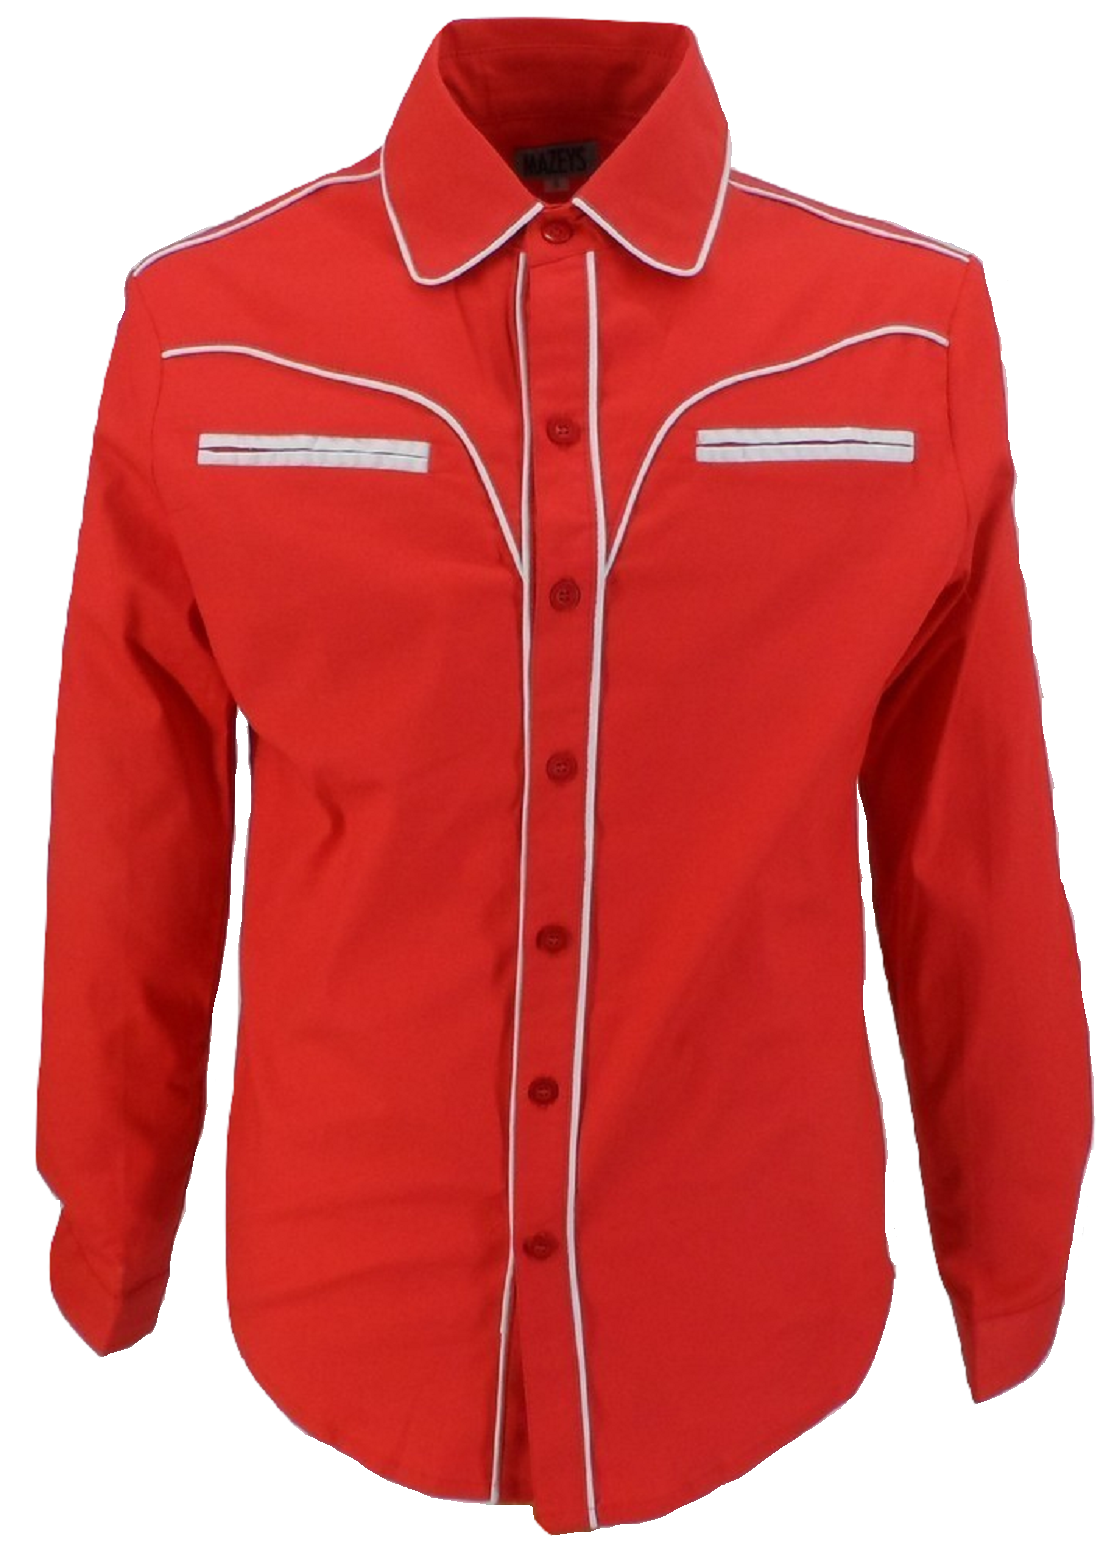 Mazeys Mens Red Western Cowboy Vintage/Retro Shirts